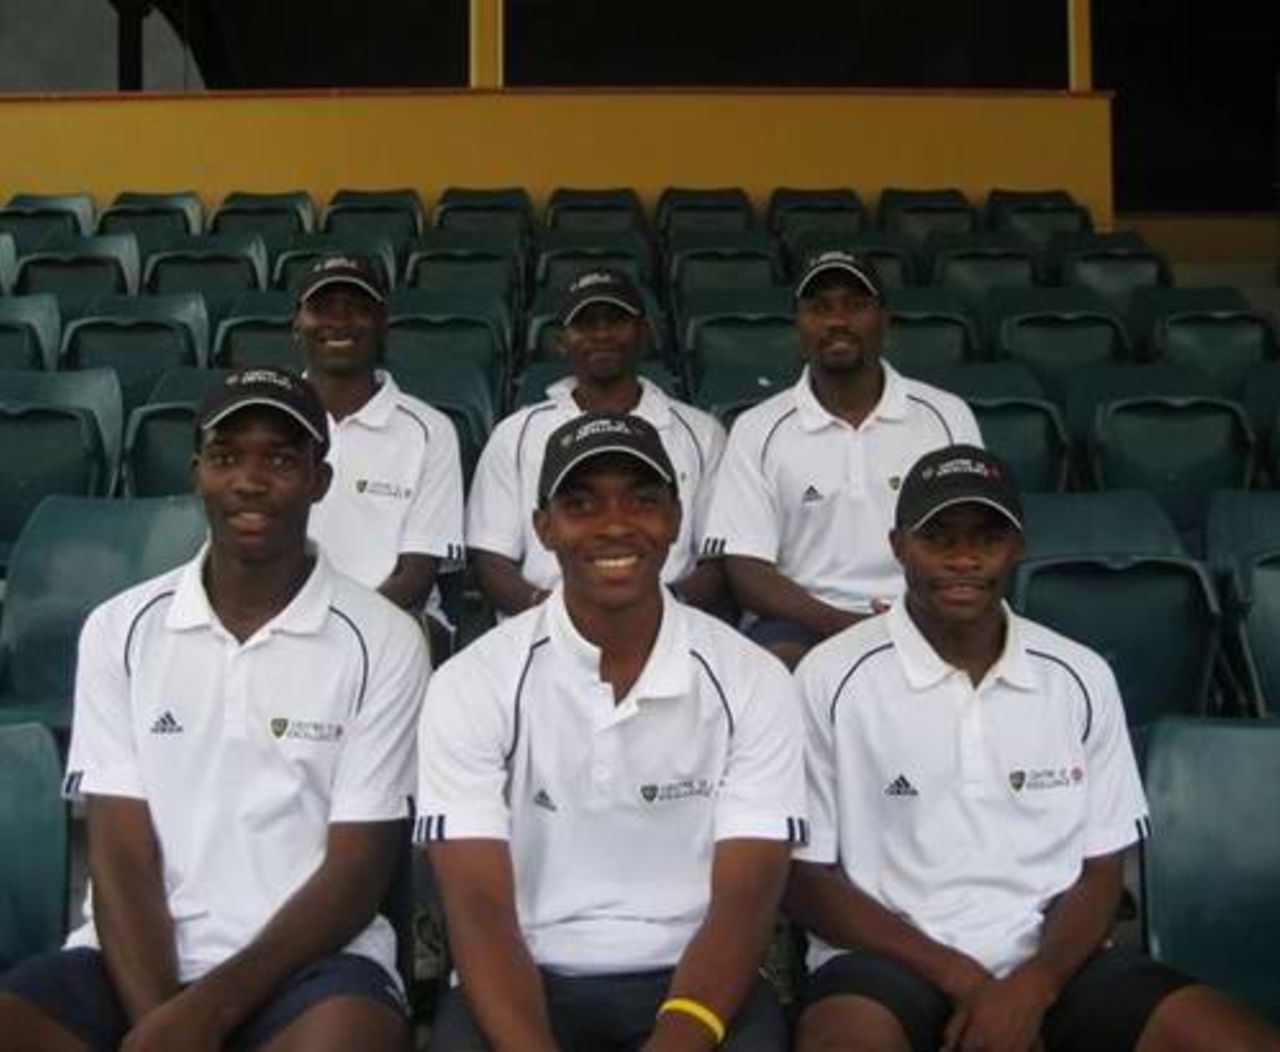 Trainees from Zimbabwe at Cricket Australia's Centre of Excellence in Adelaide.
Tendai Chisoro, Regis Chakabva, Friday Kasteni (front); Prosper Tsvanhu. Walter Chawaguta, Shepherd Makunura (back)